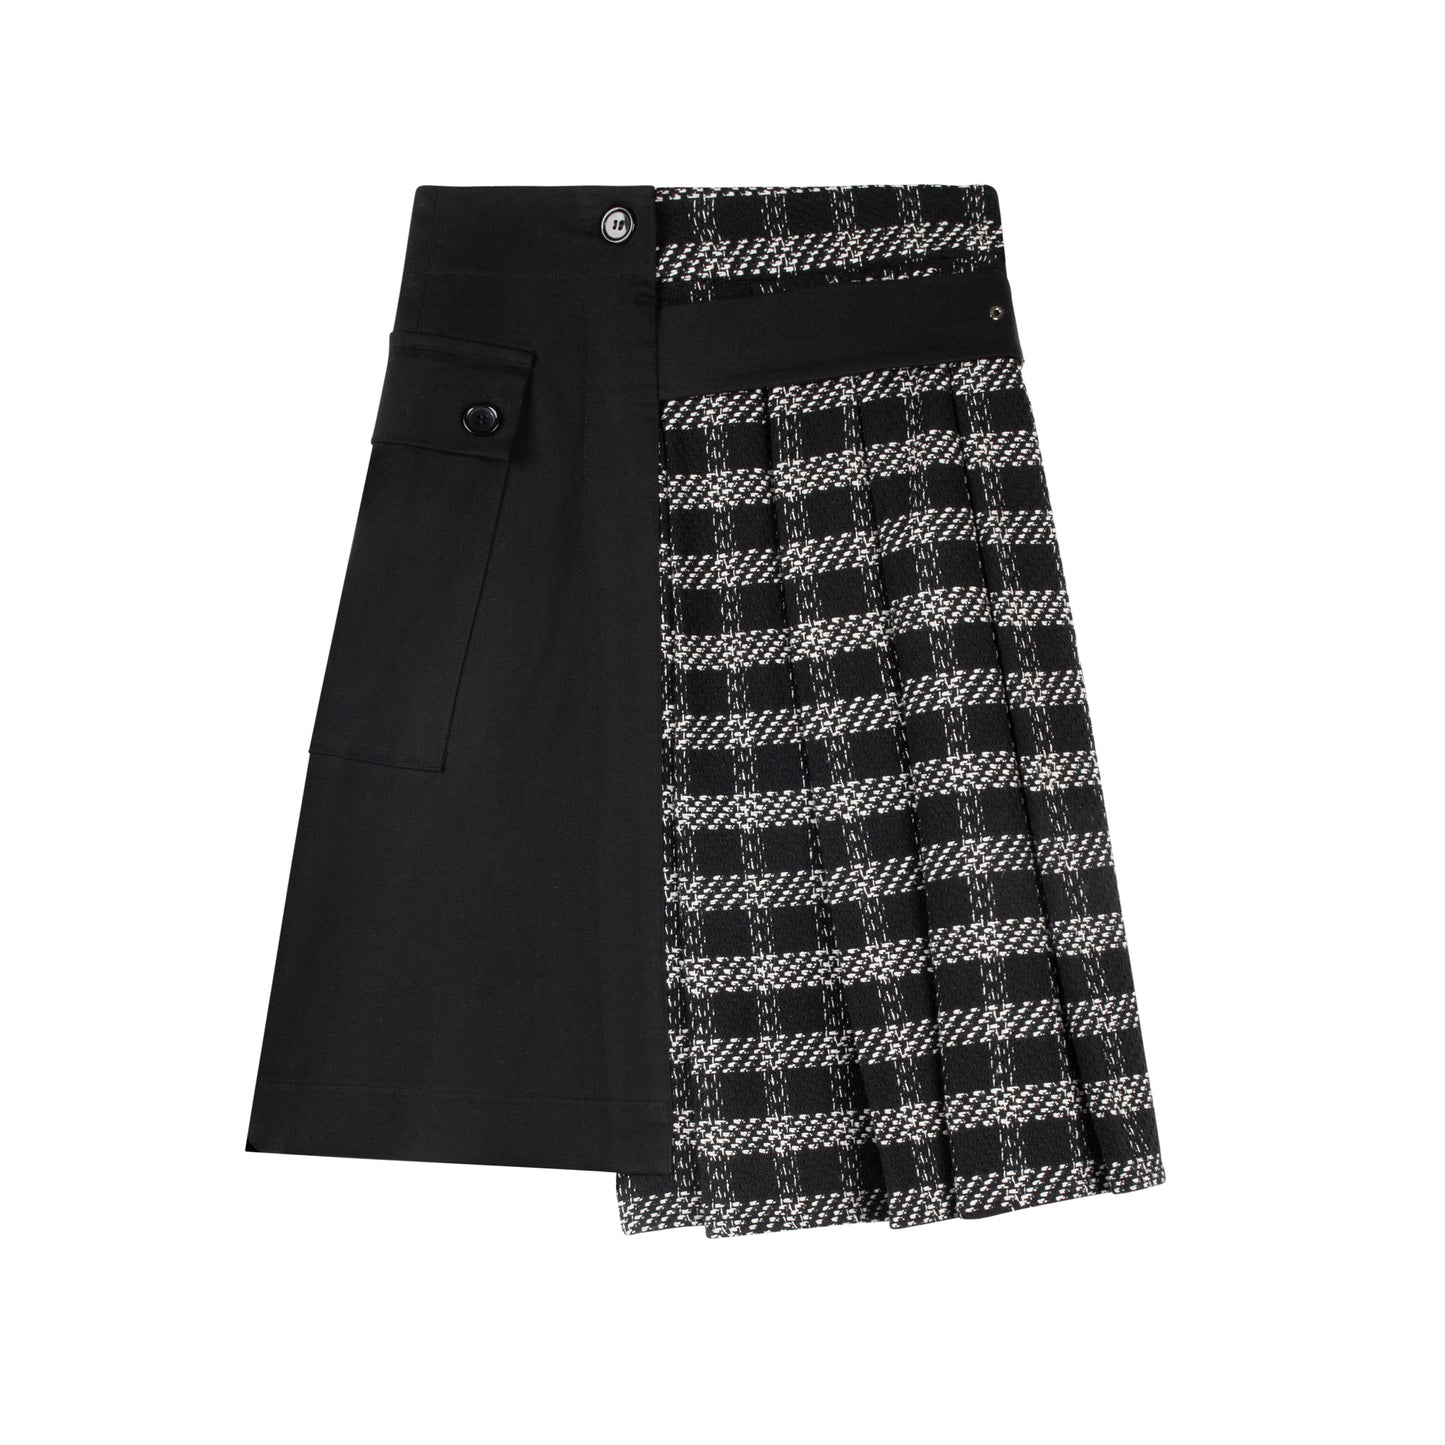 Malta Skirt